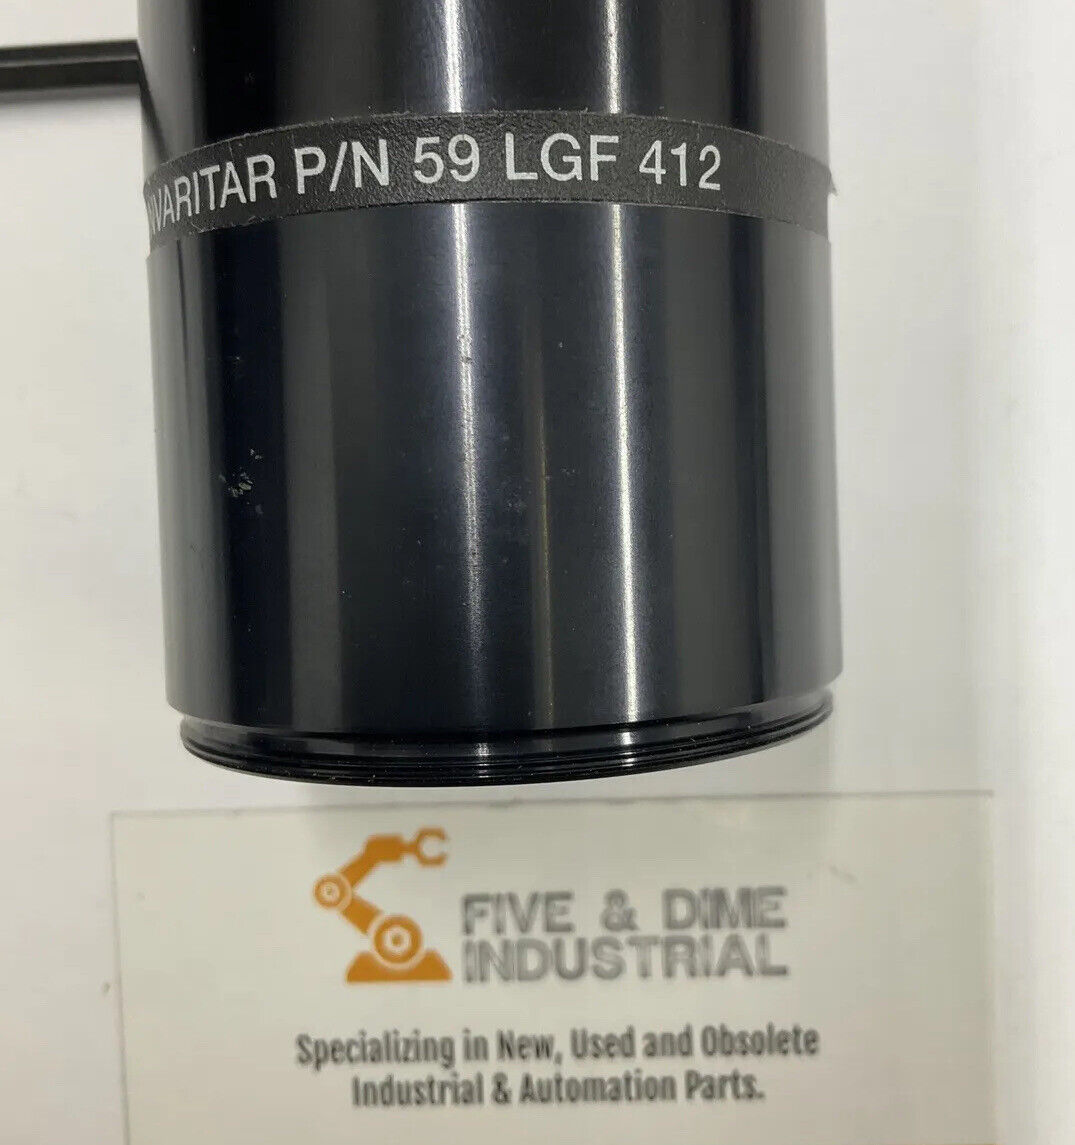 Melles Griot Invaritar P/N 59 LGF 412 Sensor (GR171) - 0